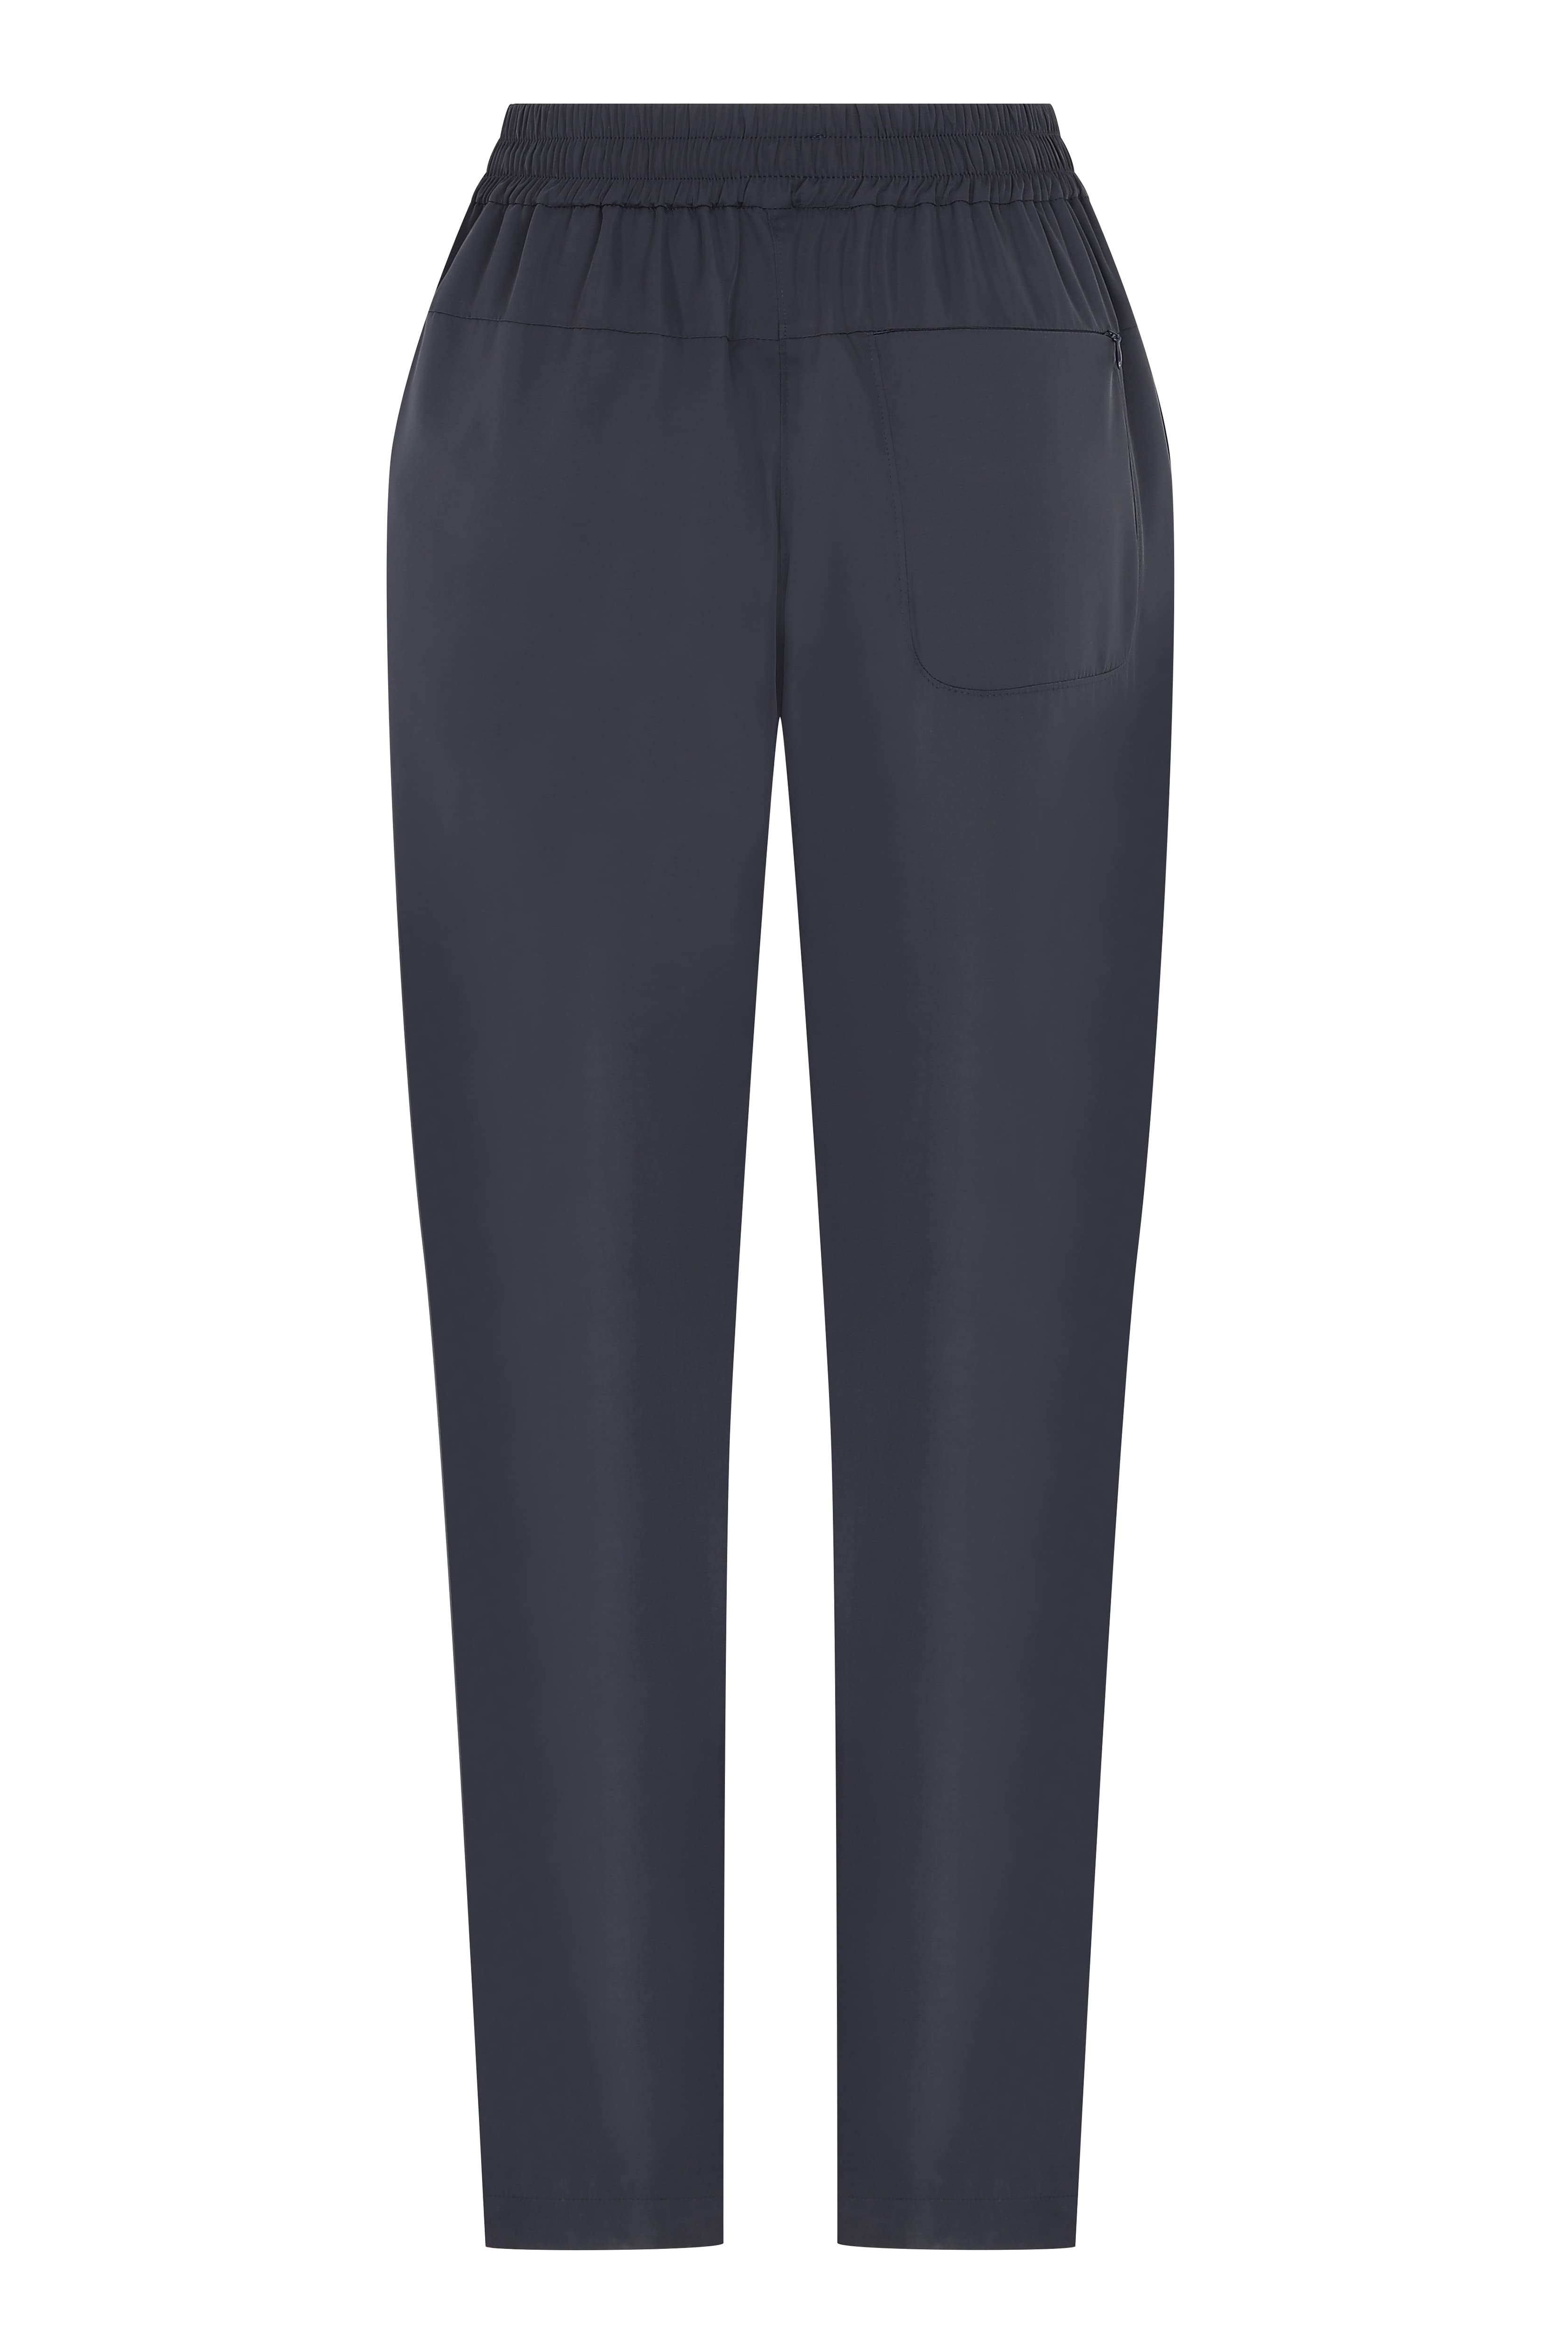 wybzd Women Casual Stretchy Pants Work Business Slacks Dress Pants Straight  Leg Trousers with Pockets Blue XL - Walmart.com